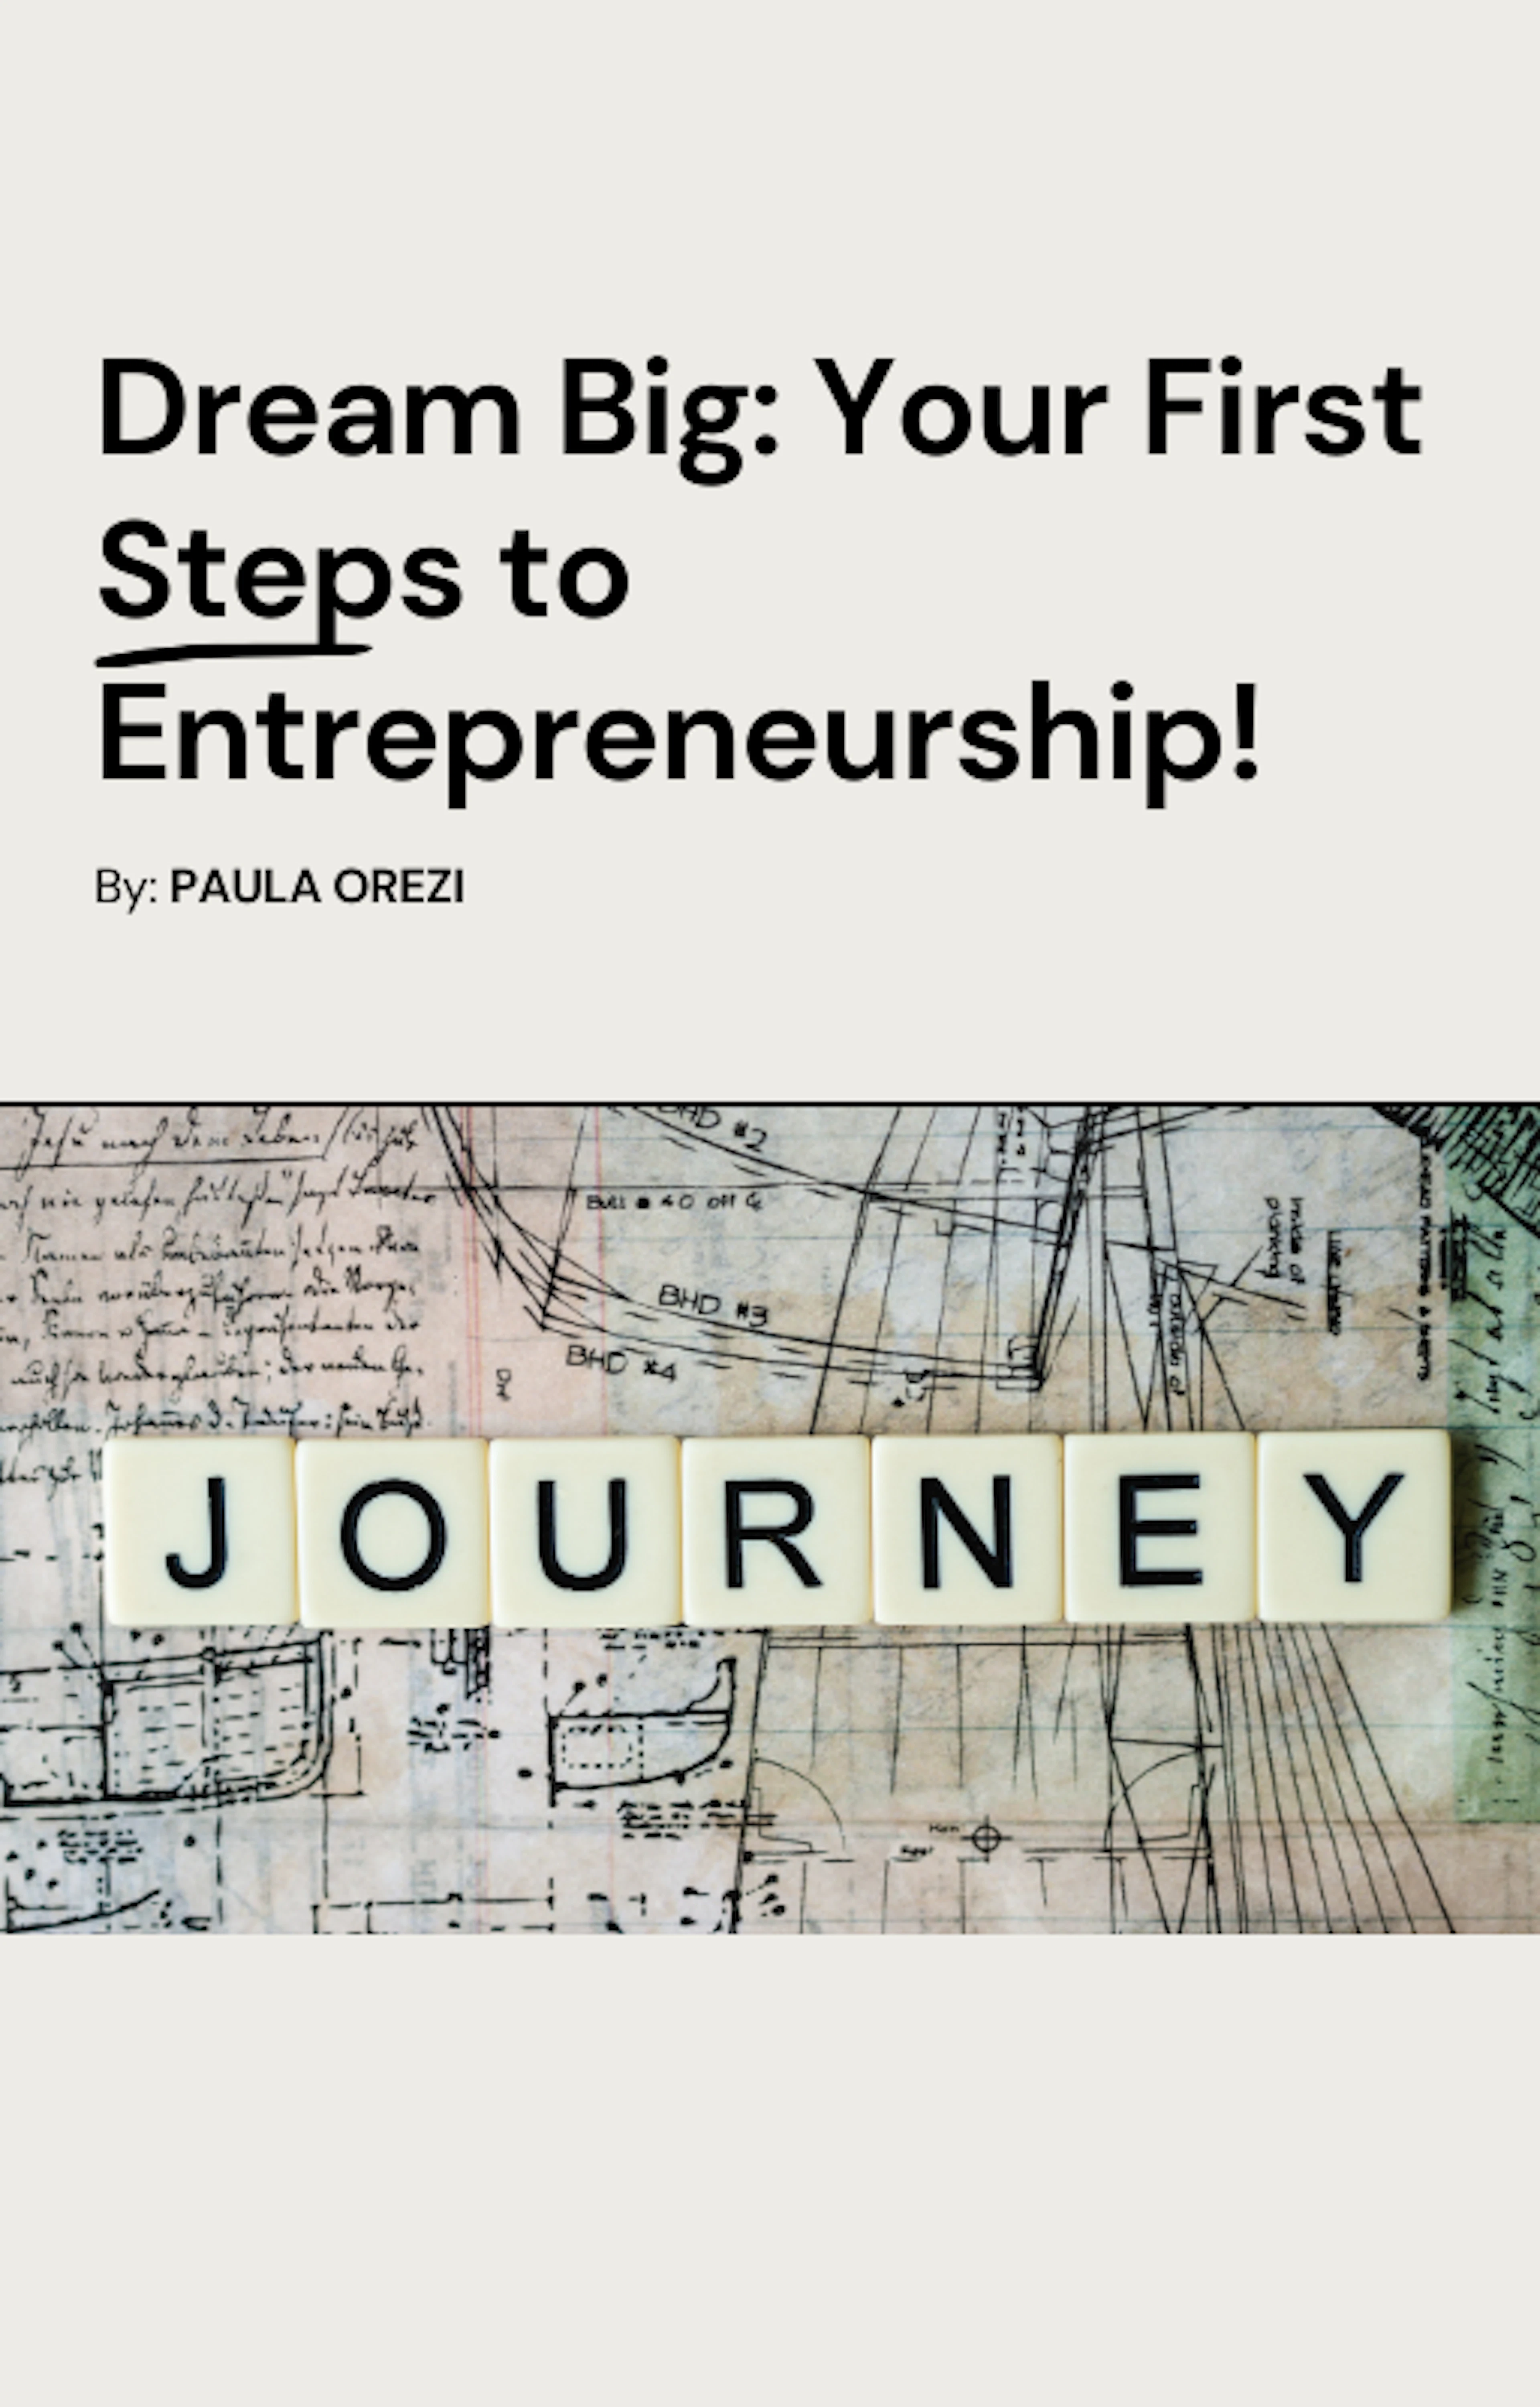 Your First Steps to Entrepreneurship!